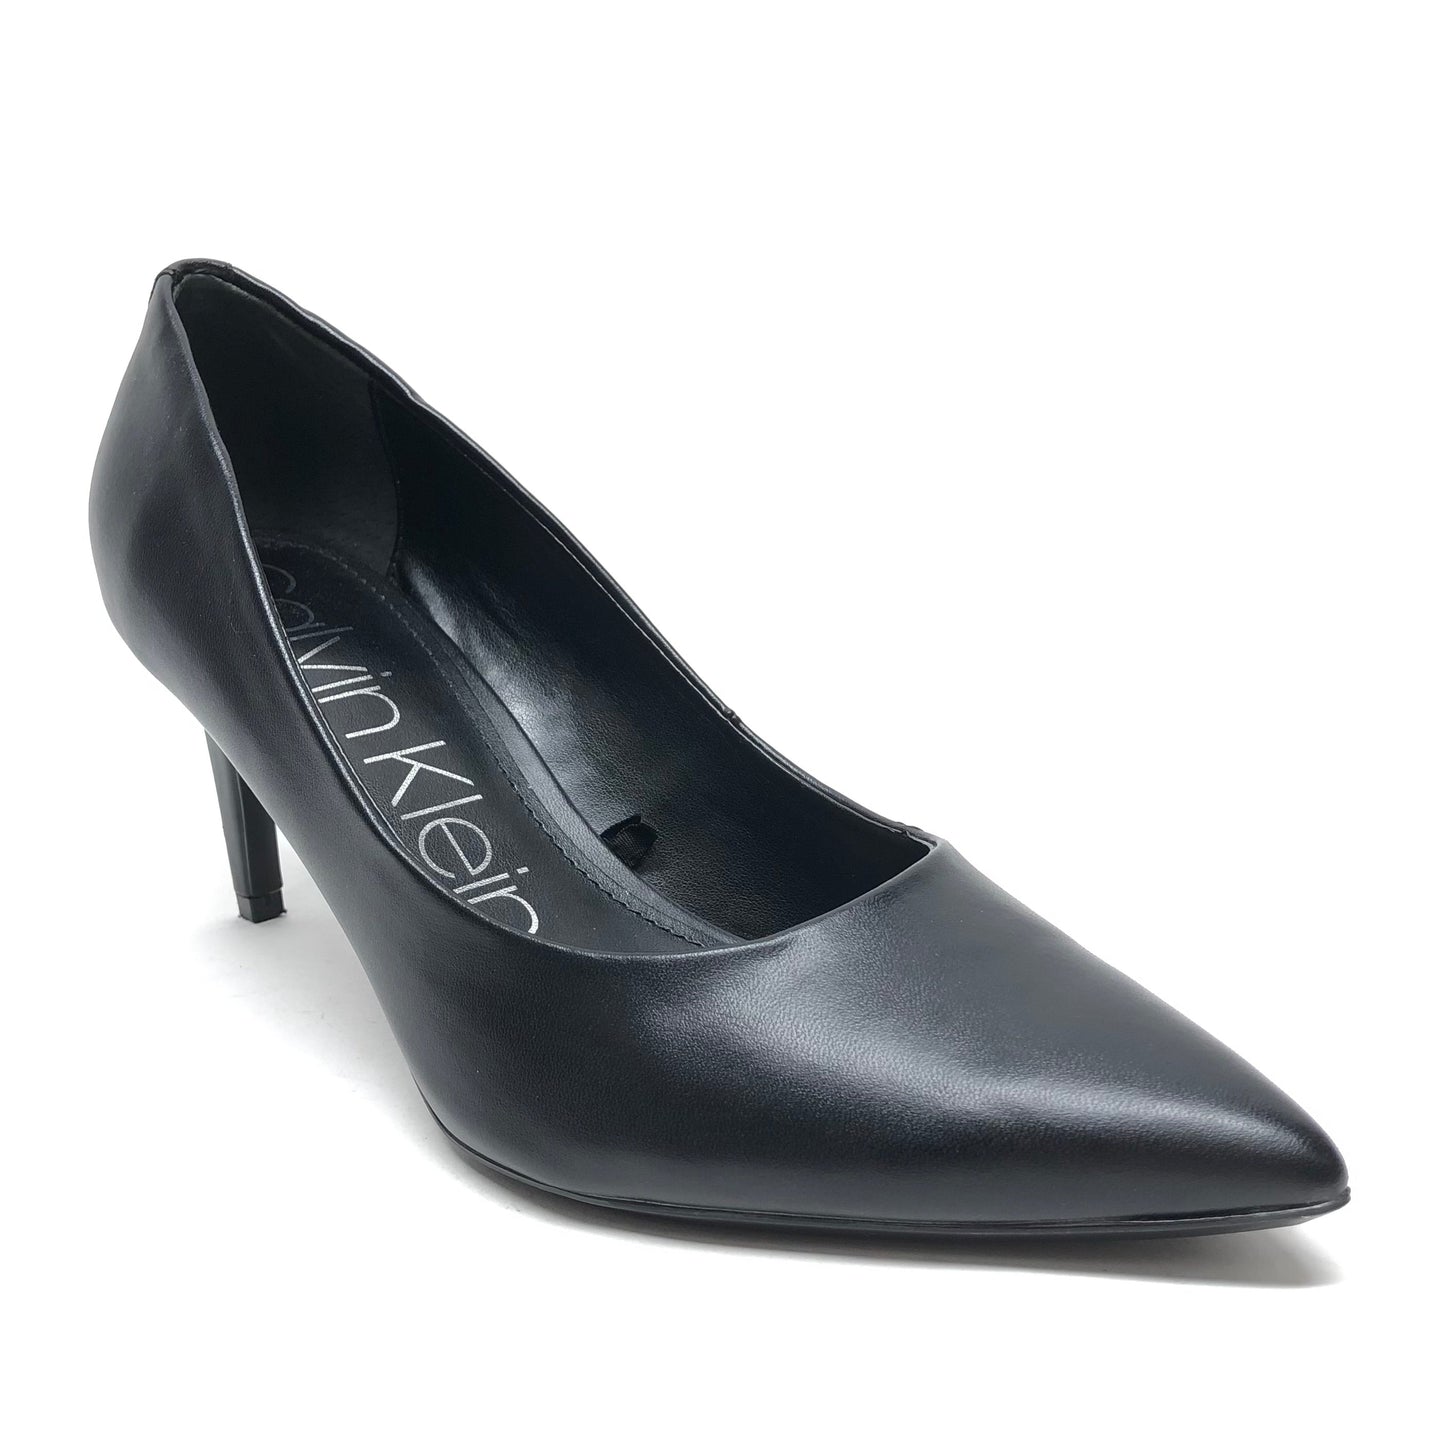 Shoes Heels Stiletto By Calvin Klein  Size: 10